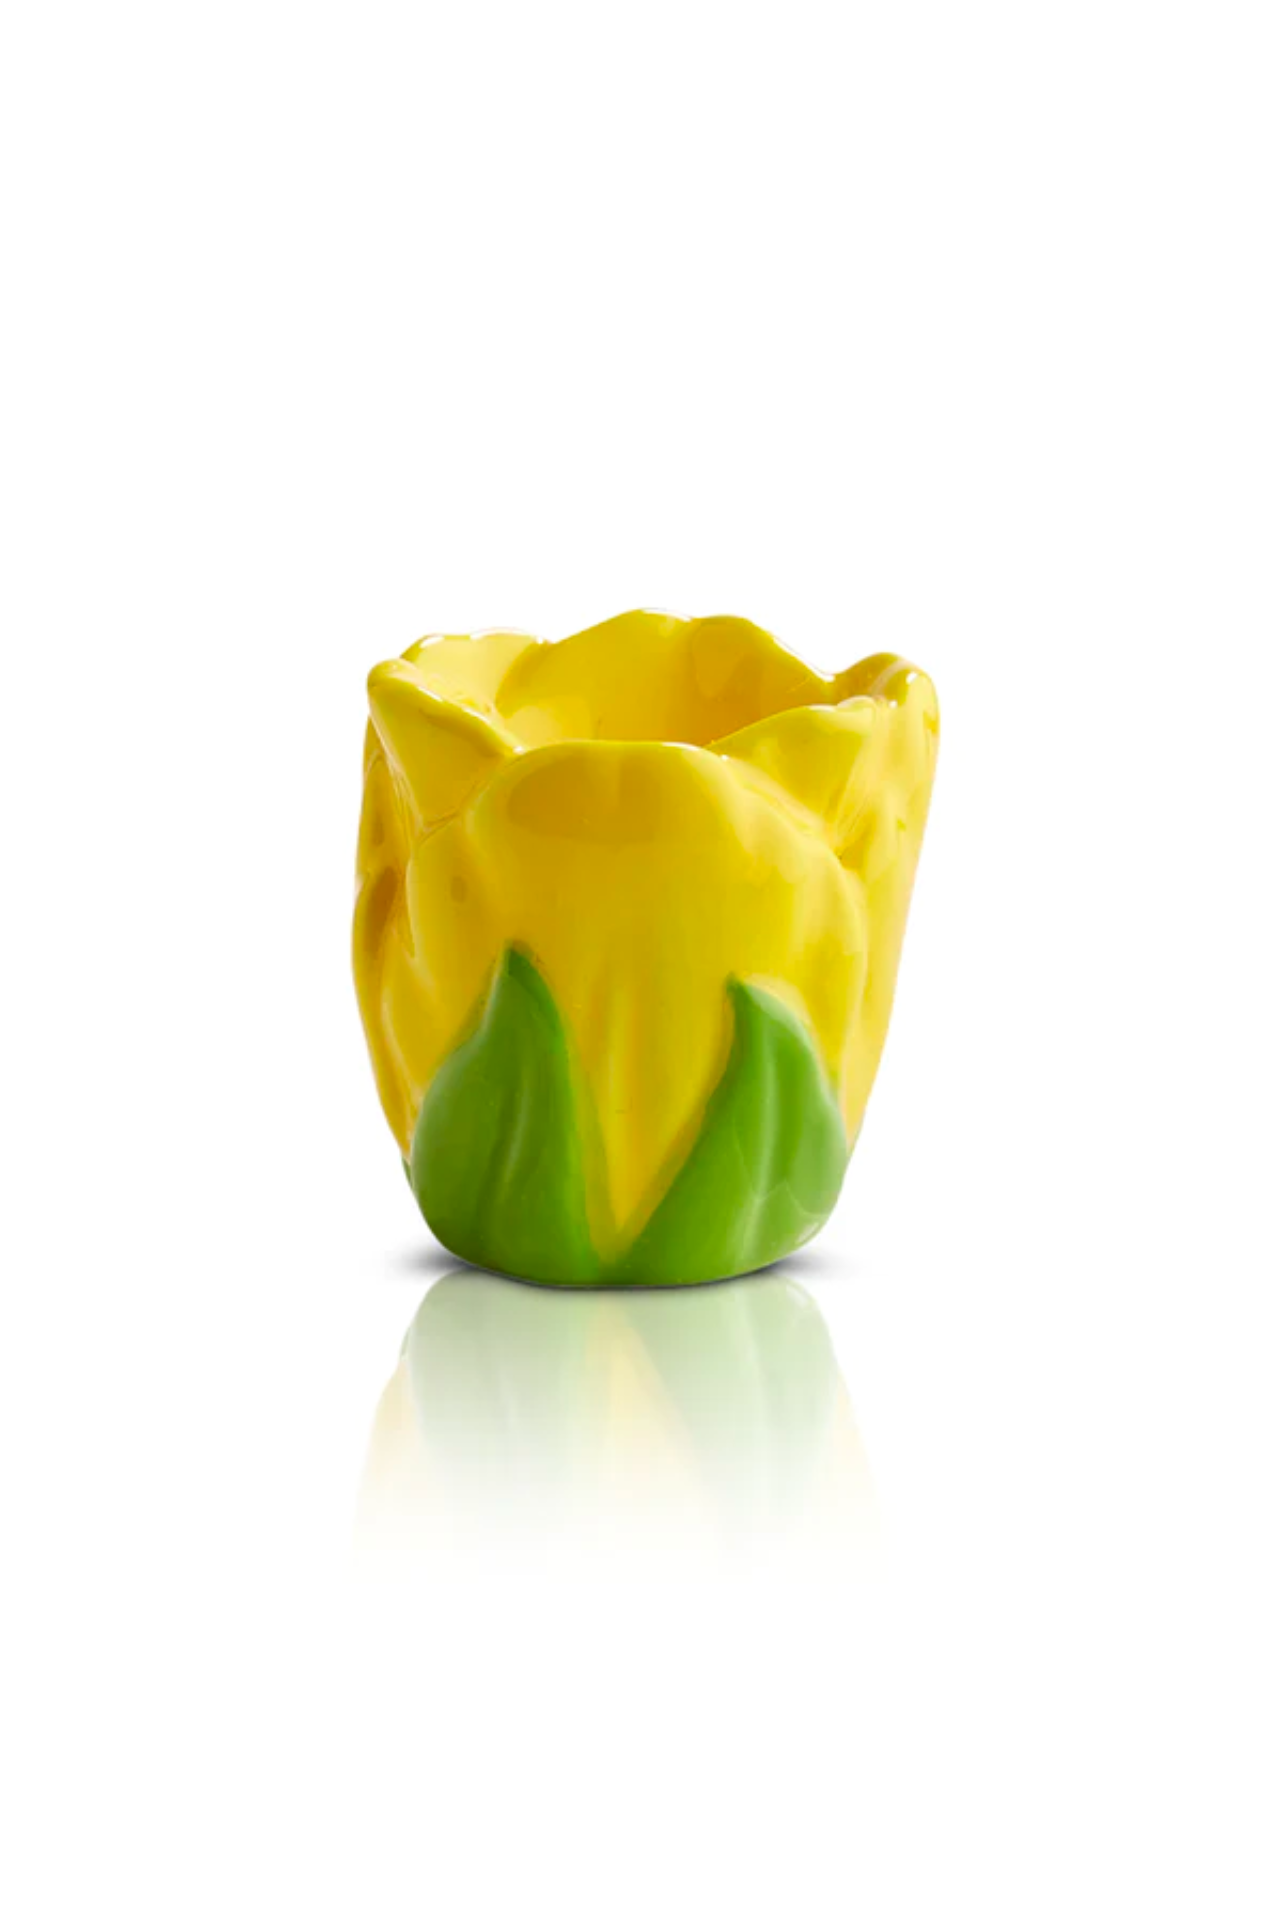 tiptoe thru 'em (yellow tulip) A180